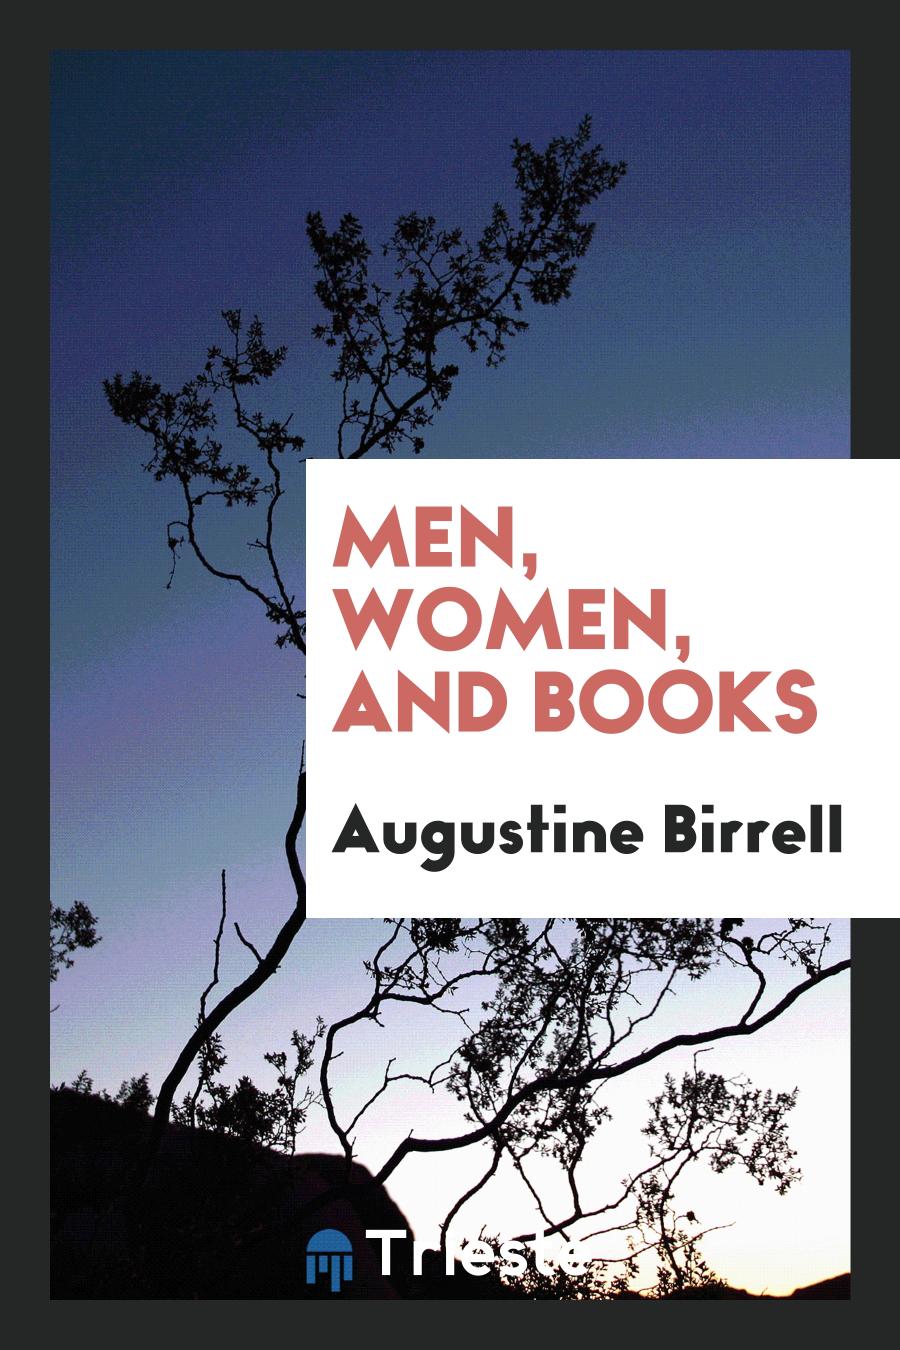 Men, women, and books